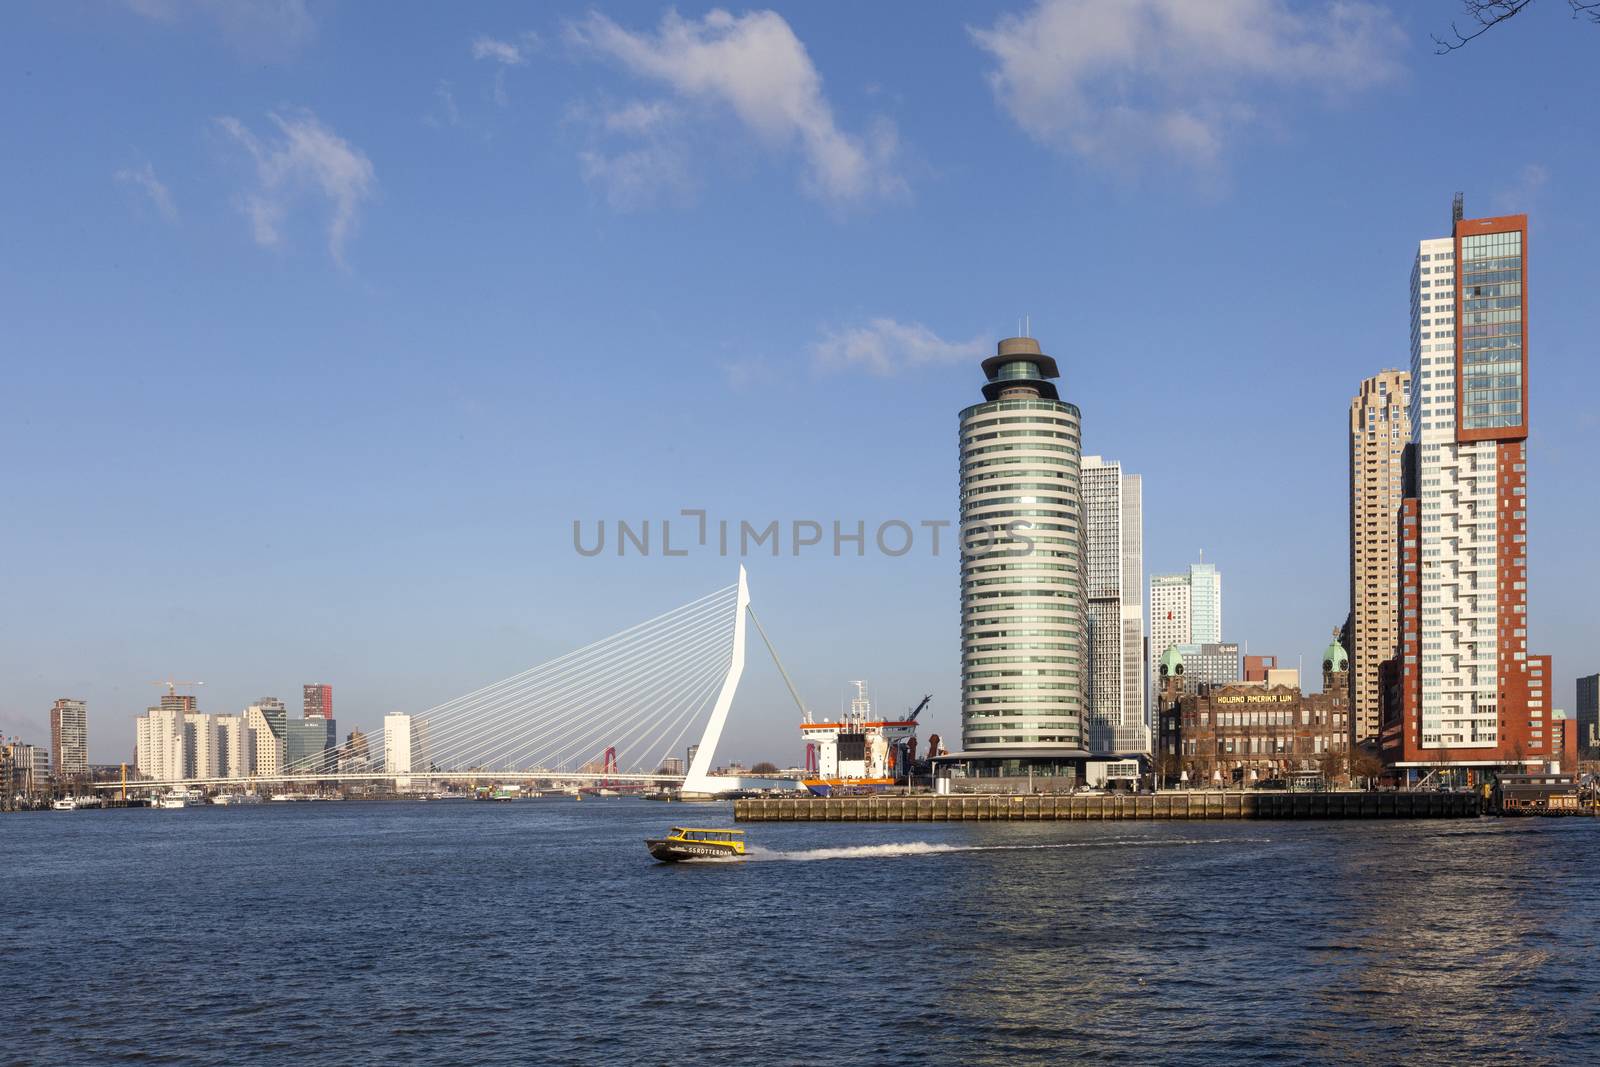 The Nieuwe Maas river in Rotterdam - the Netherlands by Tjeerdkruse